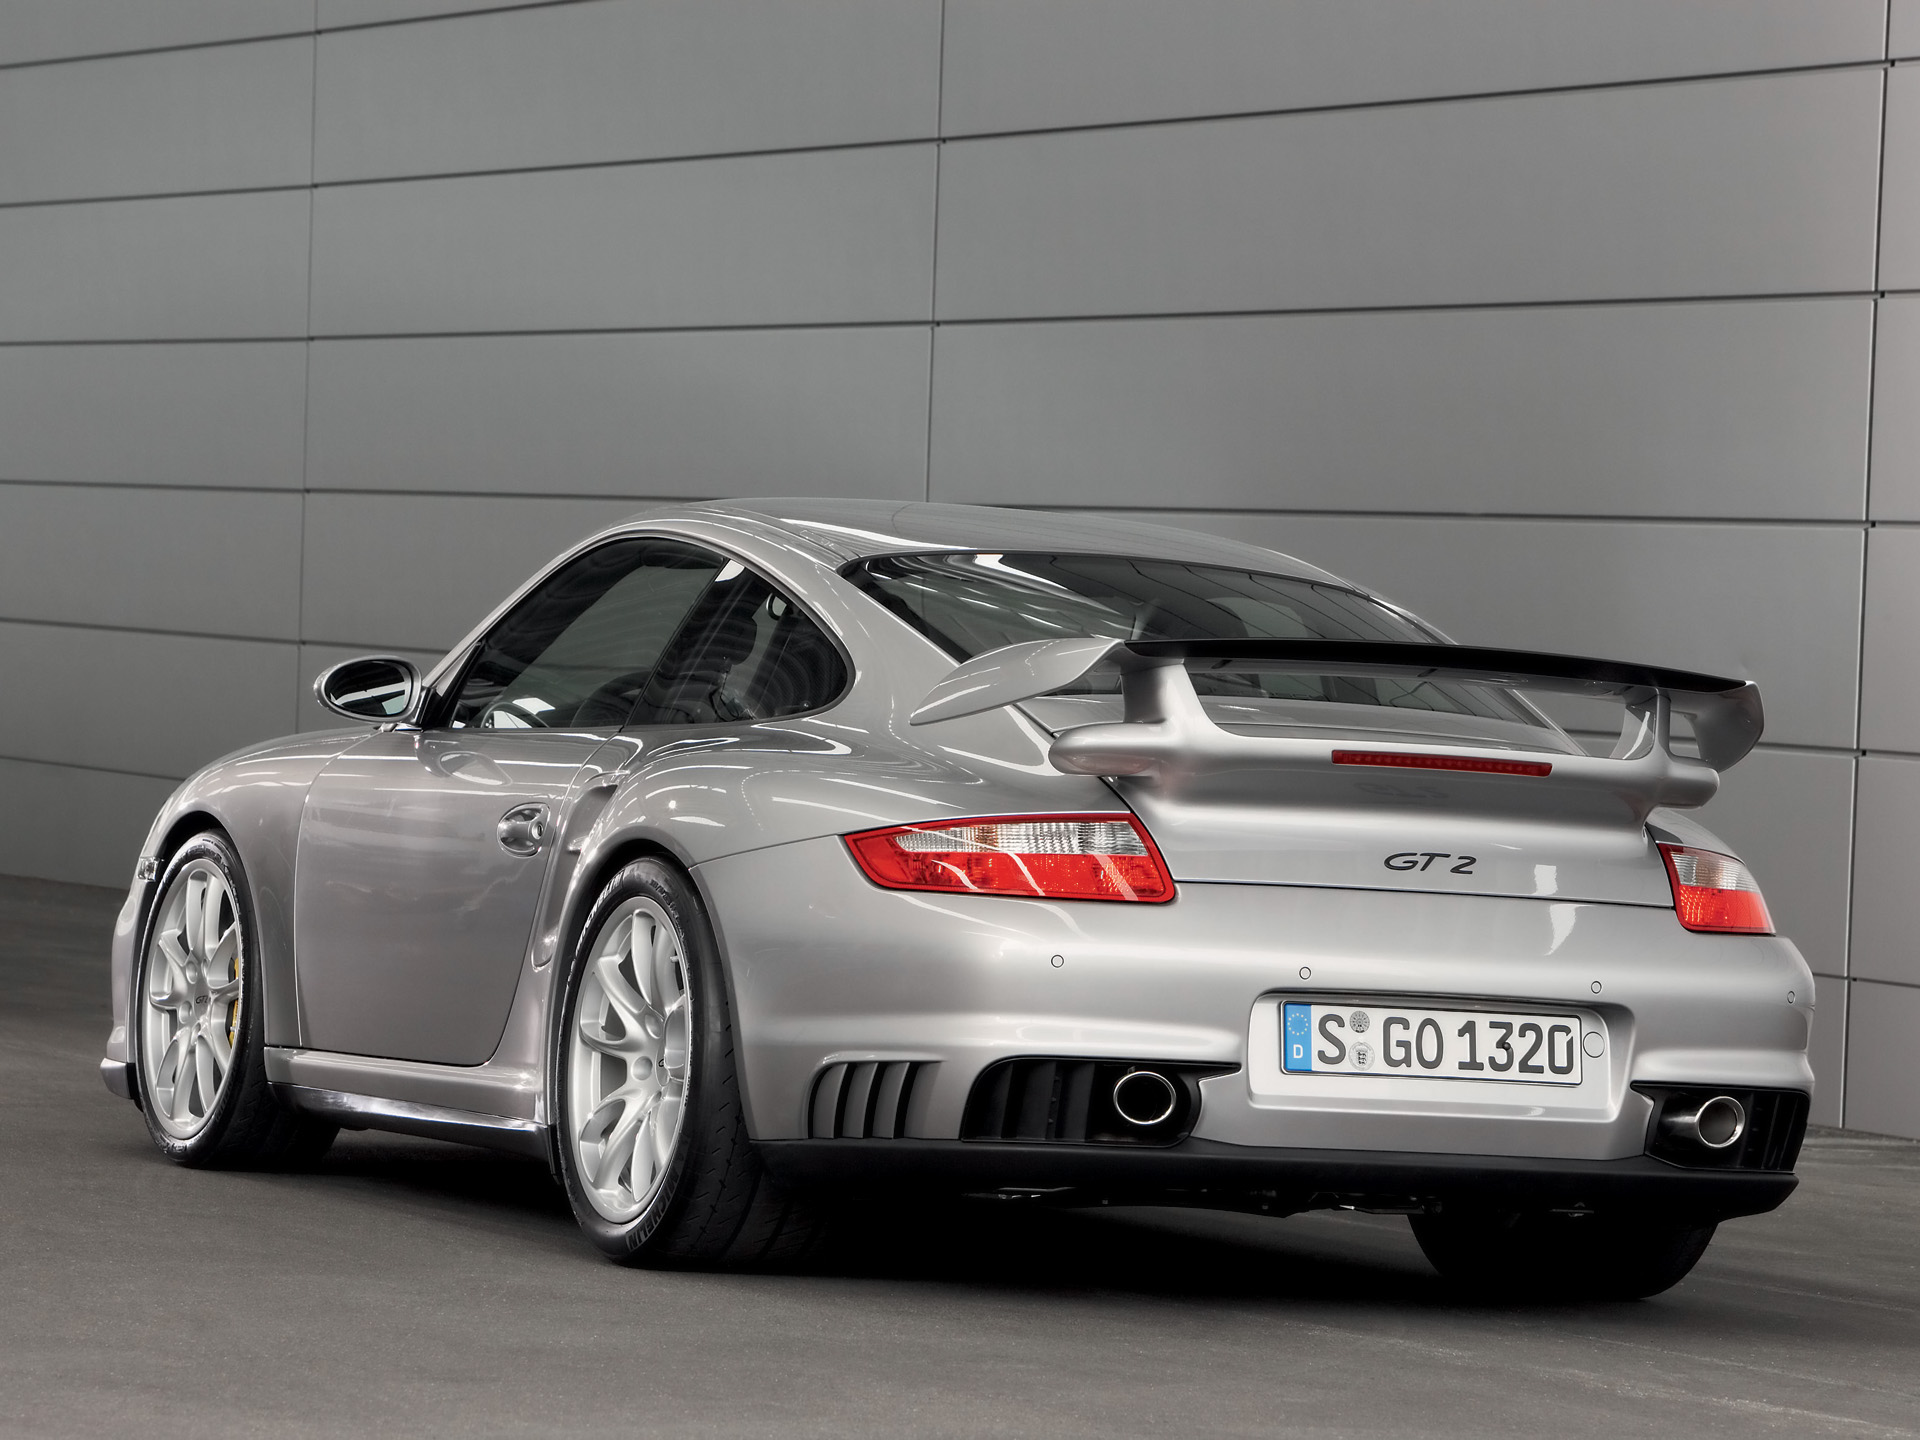 Amazing Porsche 911 GT2 Pictures & Backgrounds